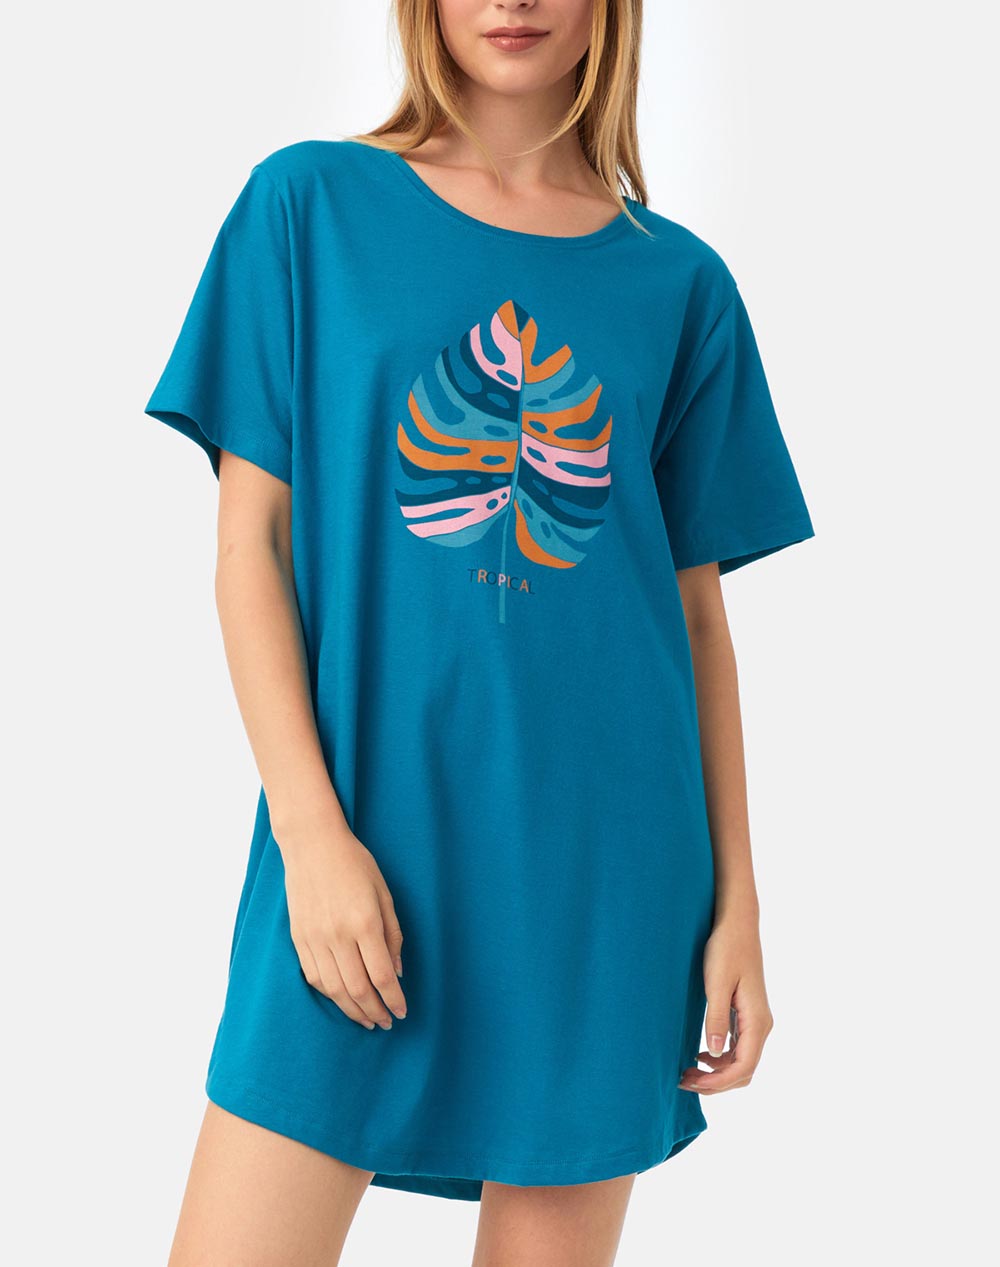 MINERVA T-SHIRT DRESS ΓΥΝ.TROPICAL 90-52538-881 Turquoise